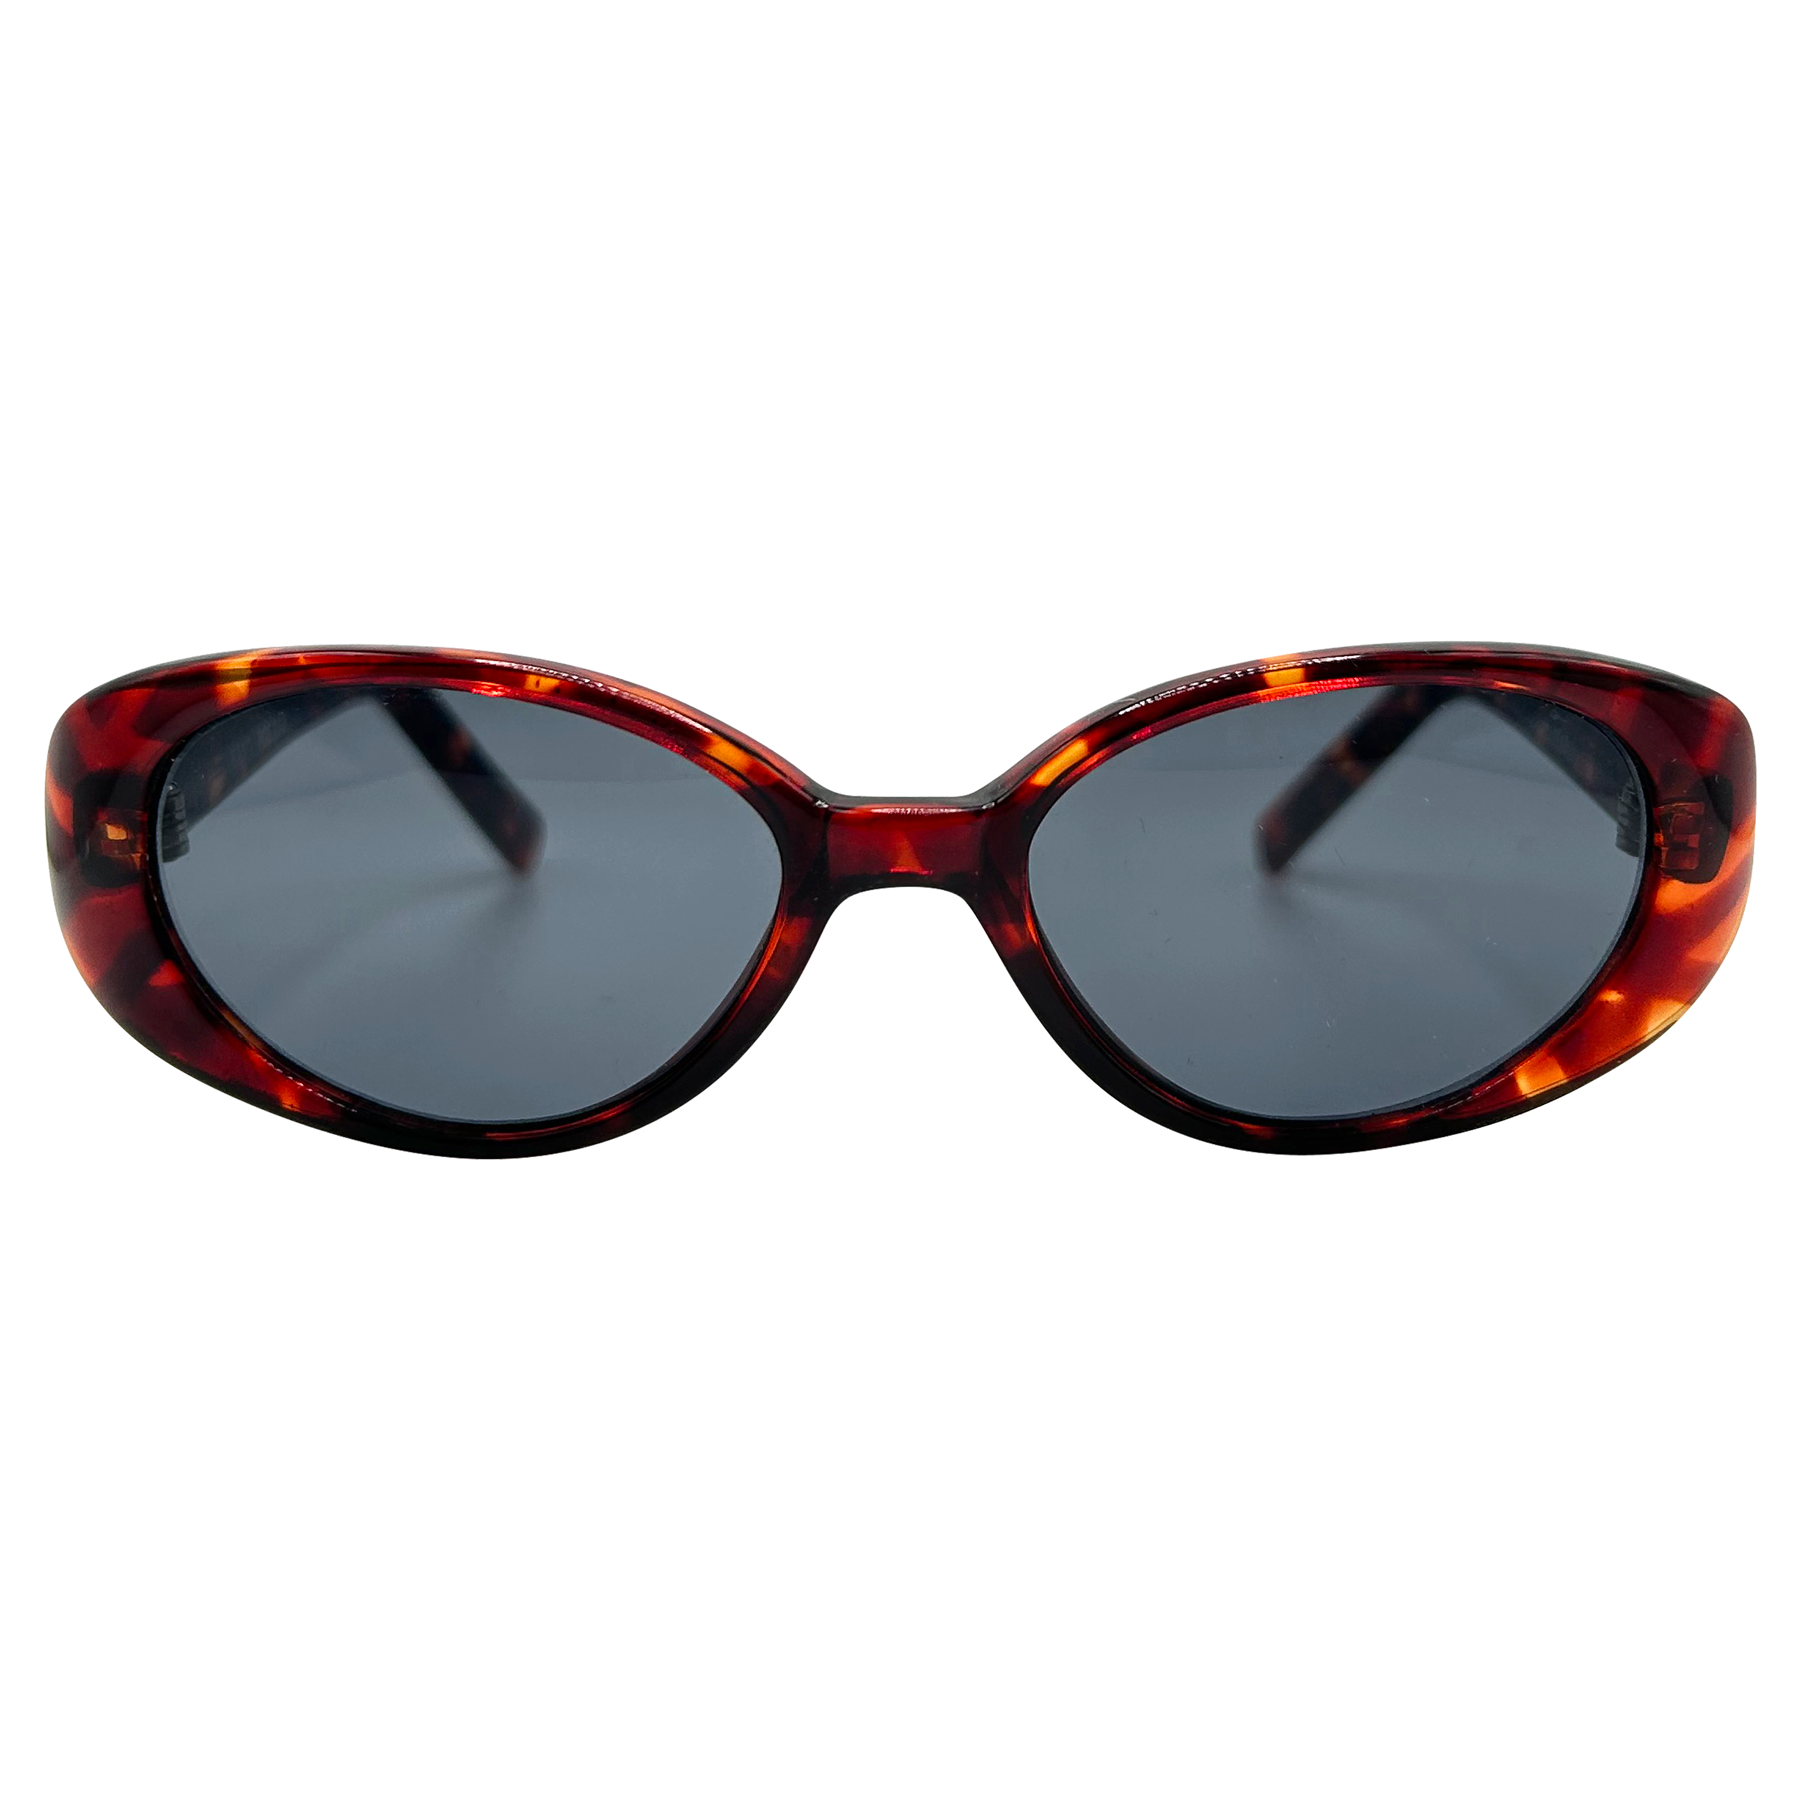 FLYIN' Oval Sunglasses